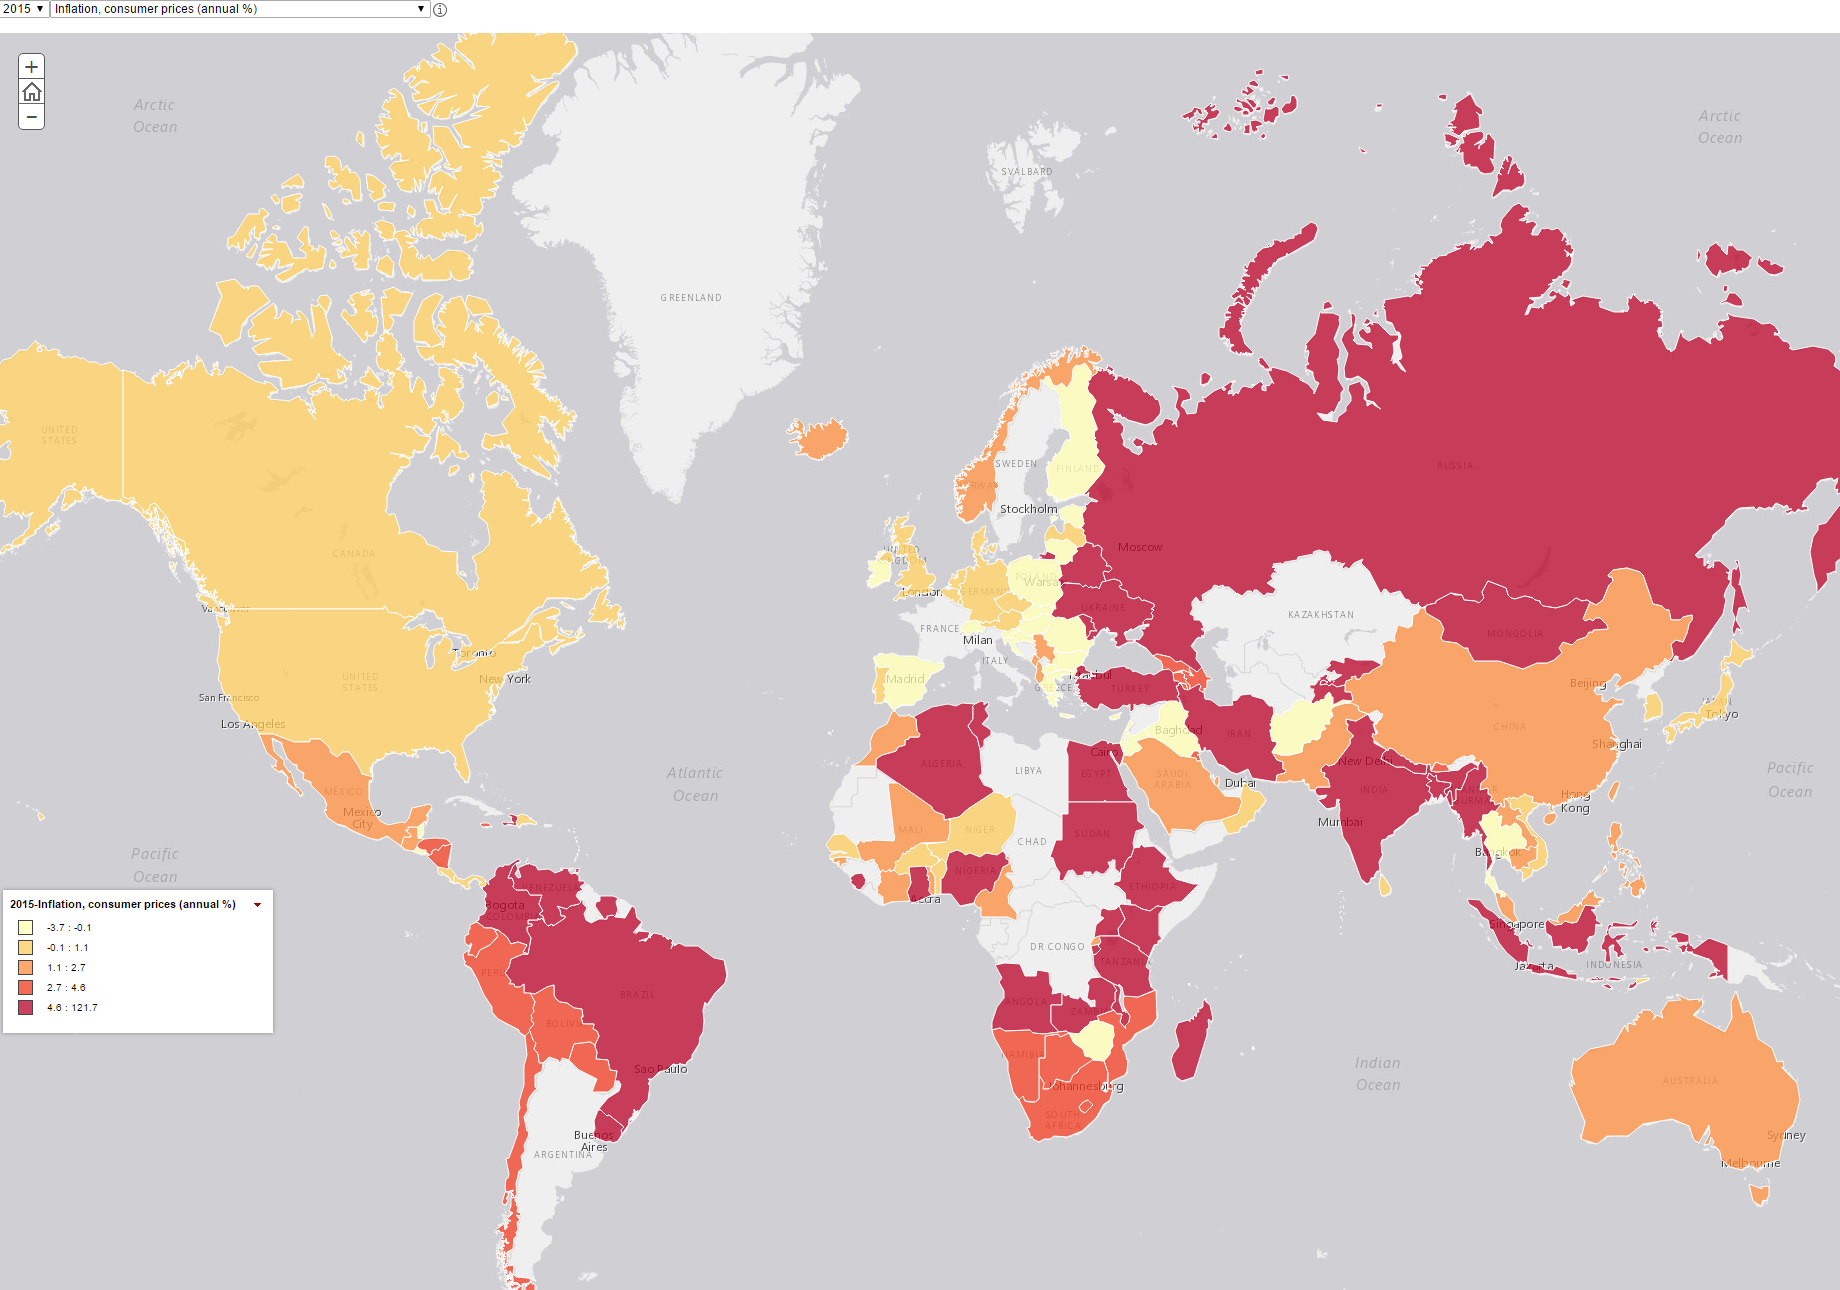 FireShot Capture 62 - World Development Indicator_ - http___databank.worldbank.org_data_reports